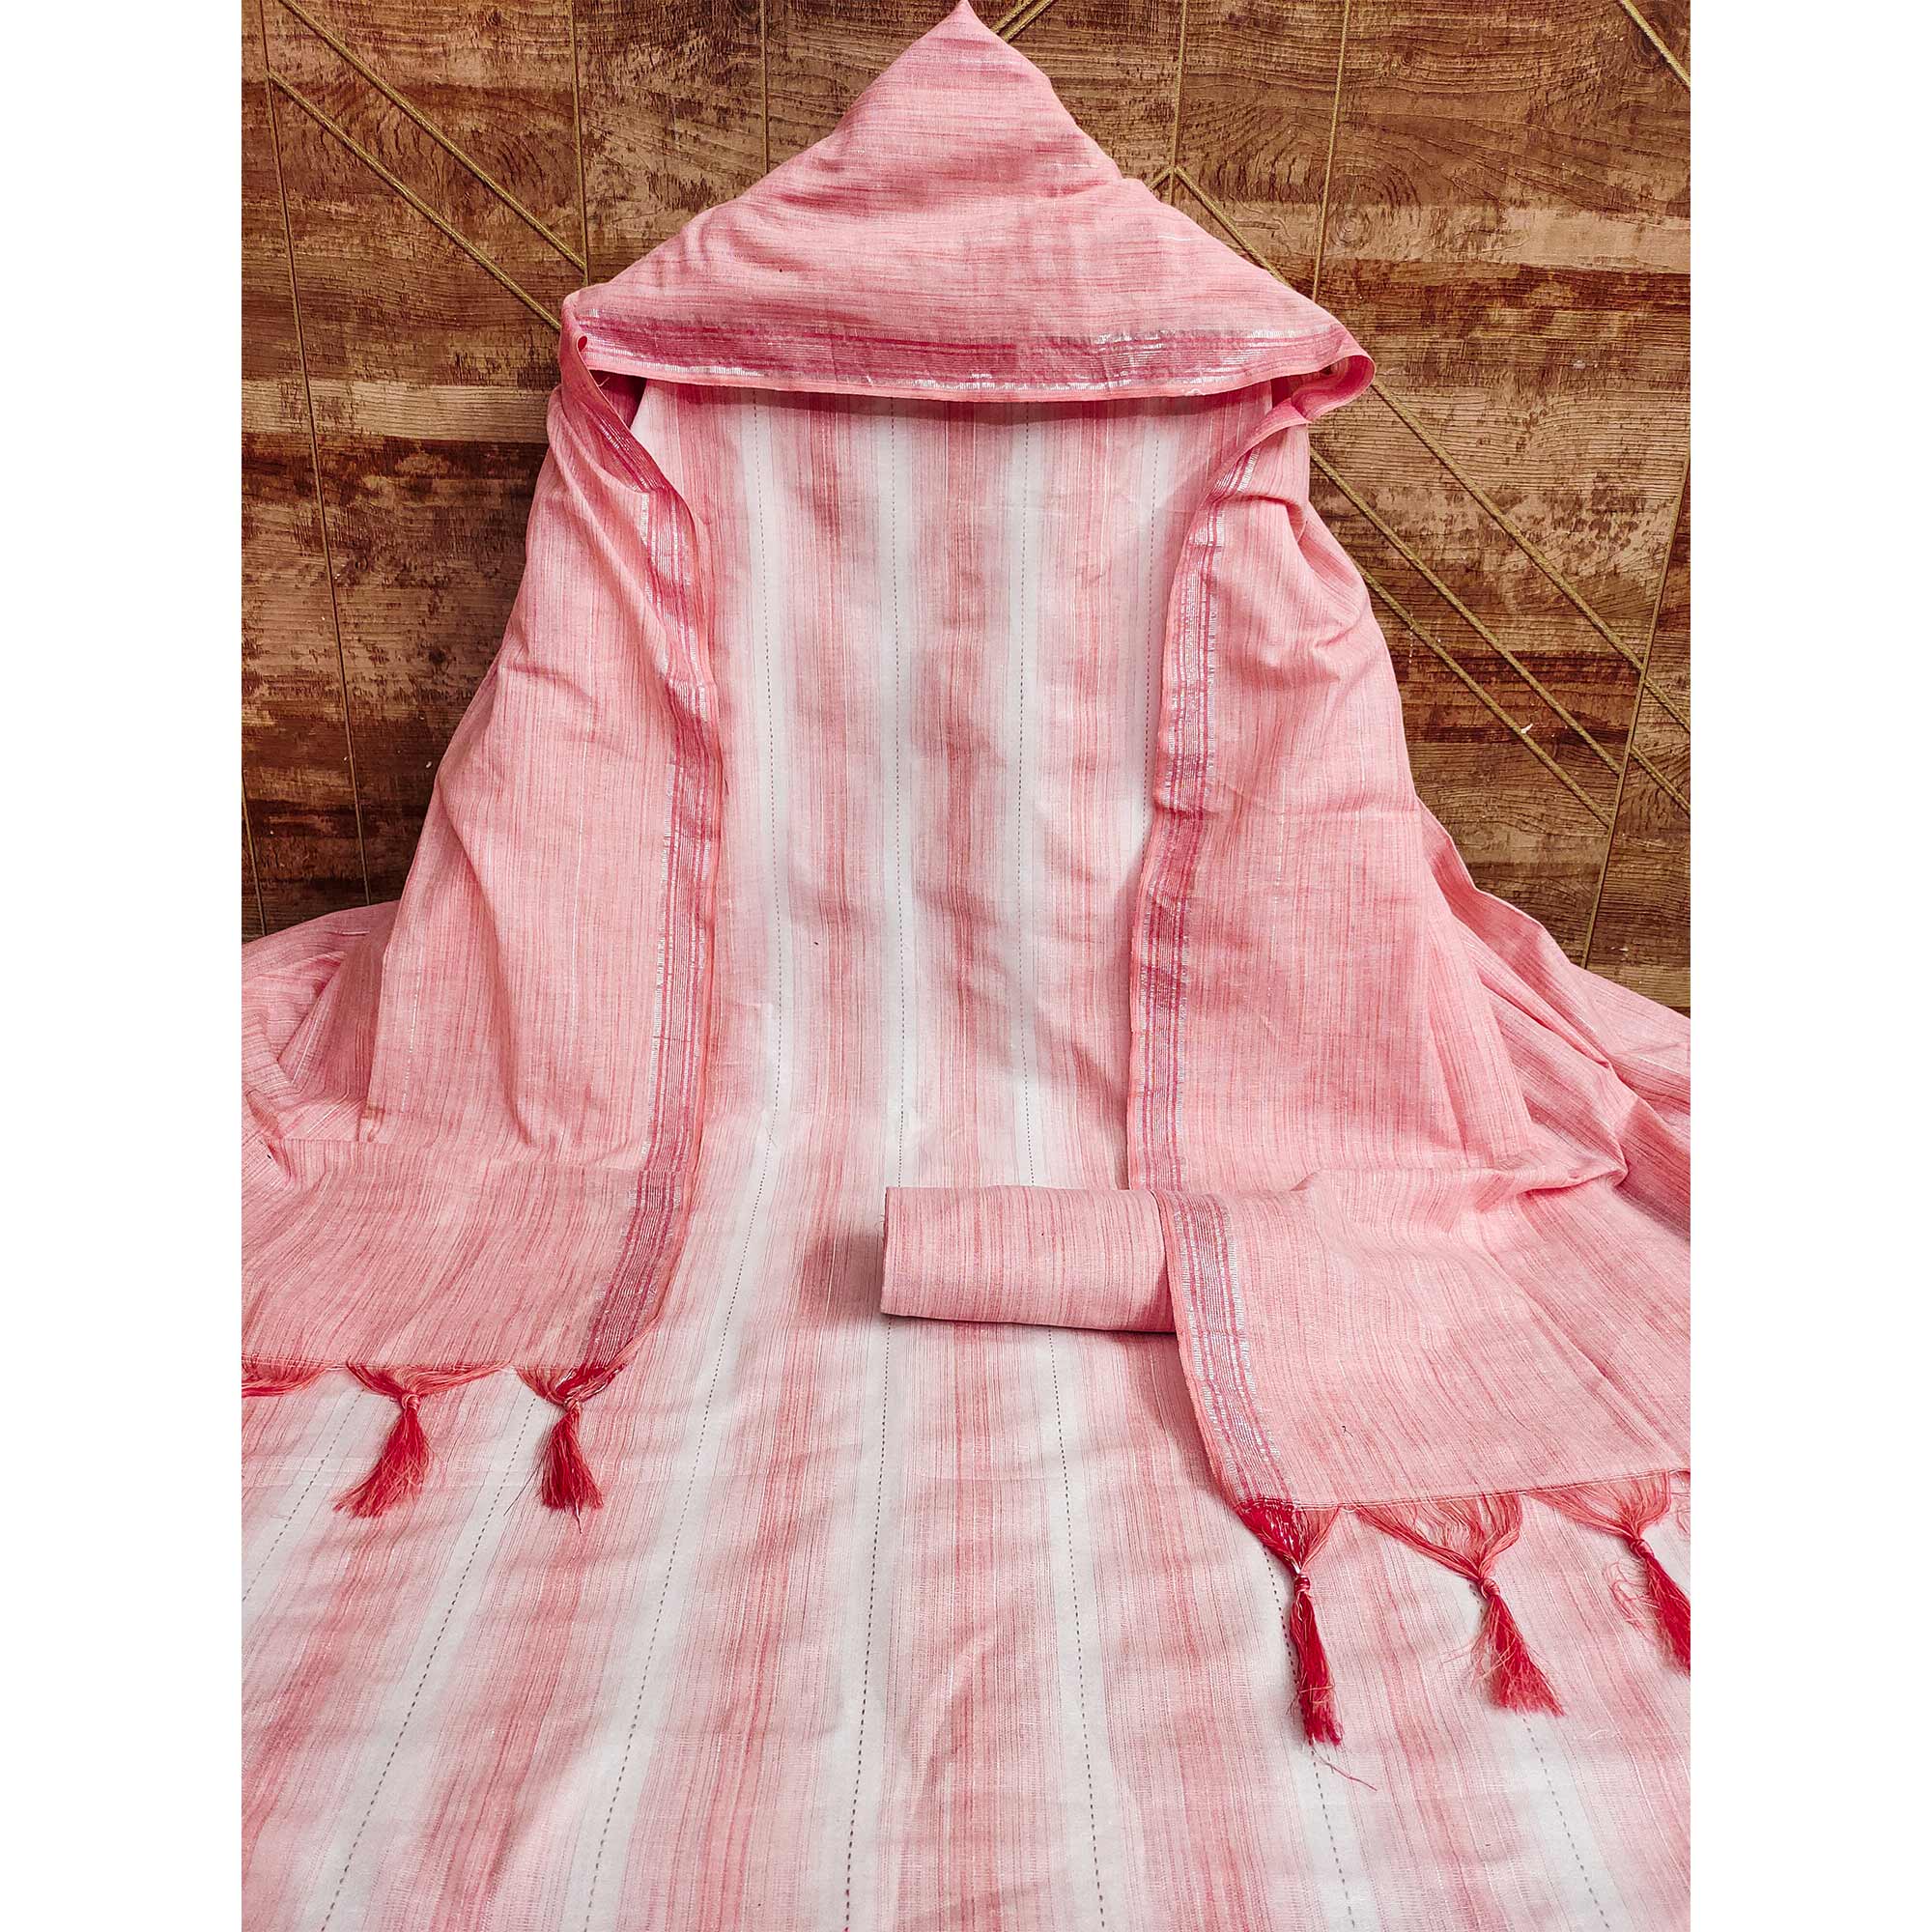 Pink Woven Cotton Dress Material